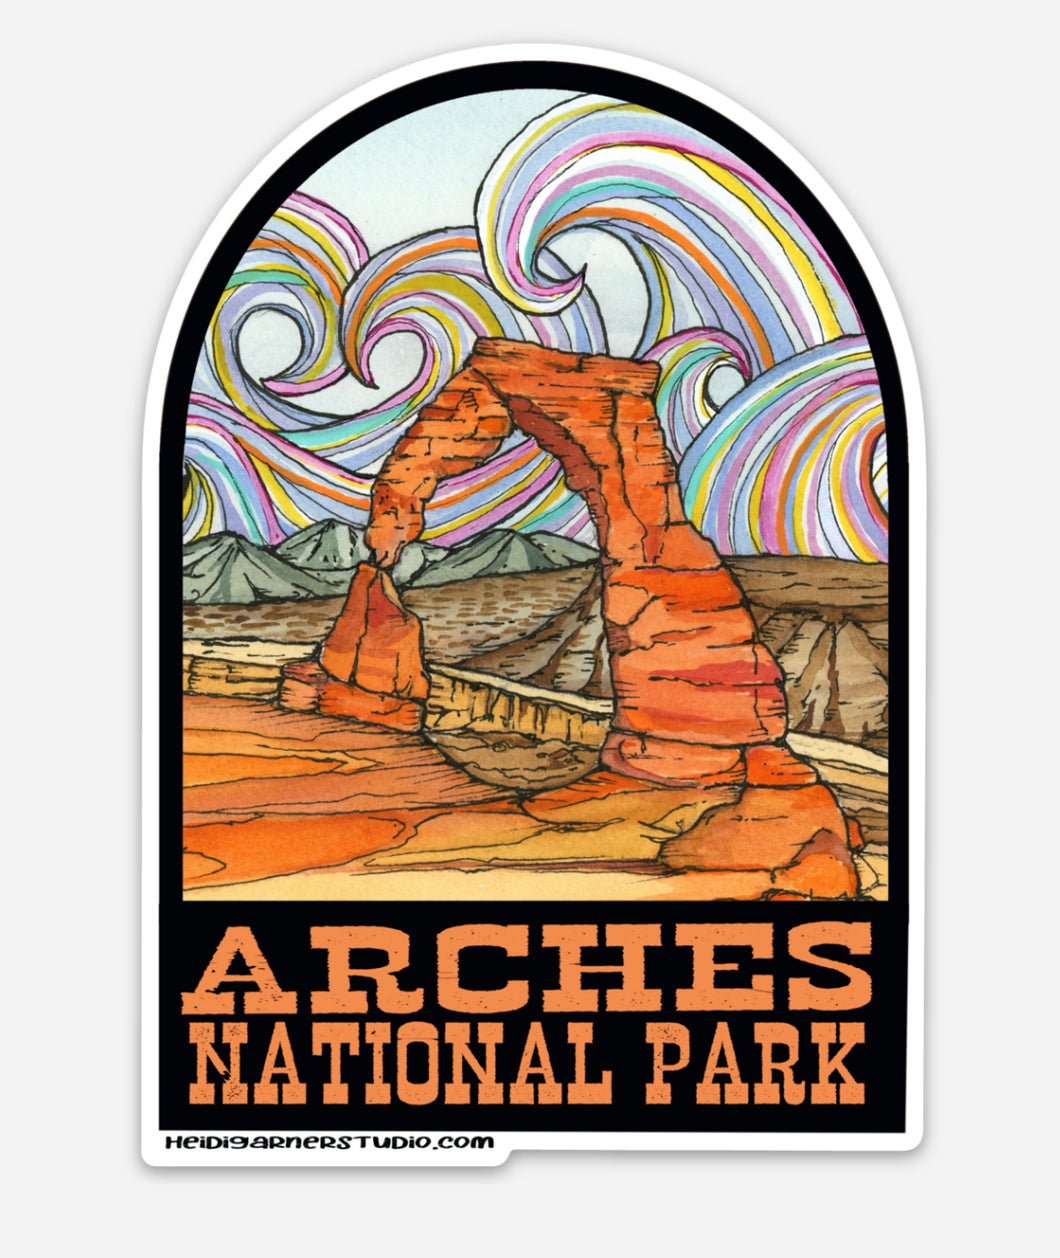 Arches National Park Utah  3x4.25 inch sticker